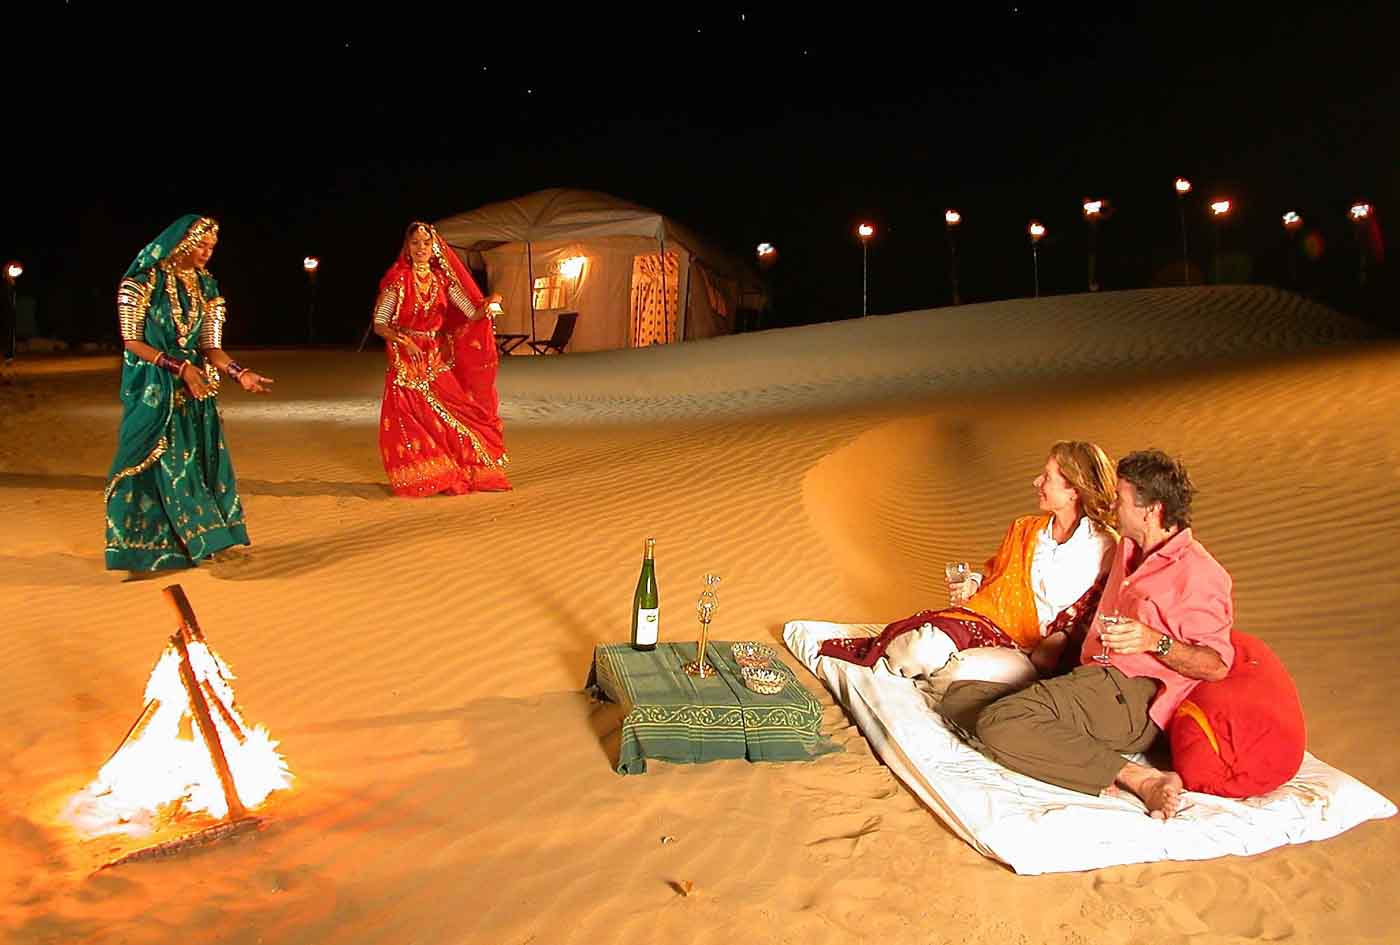 gorbandh-palace-dinner-at-sand-dunes-jaisalmer